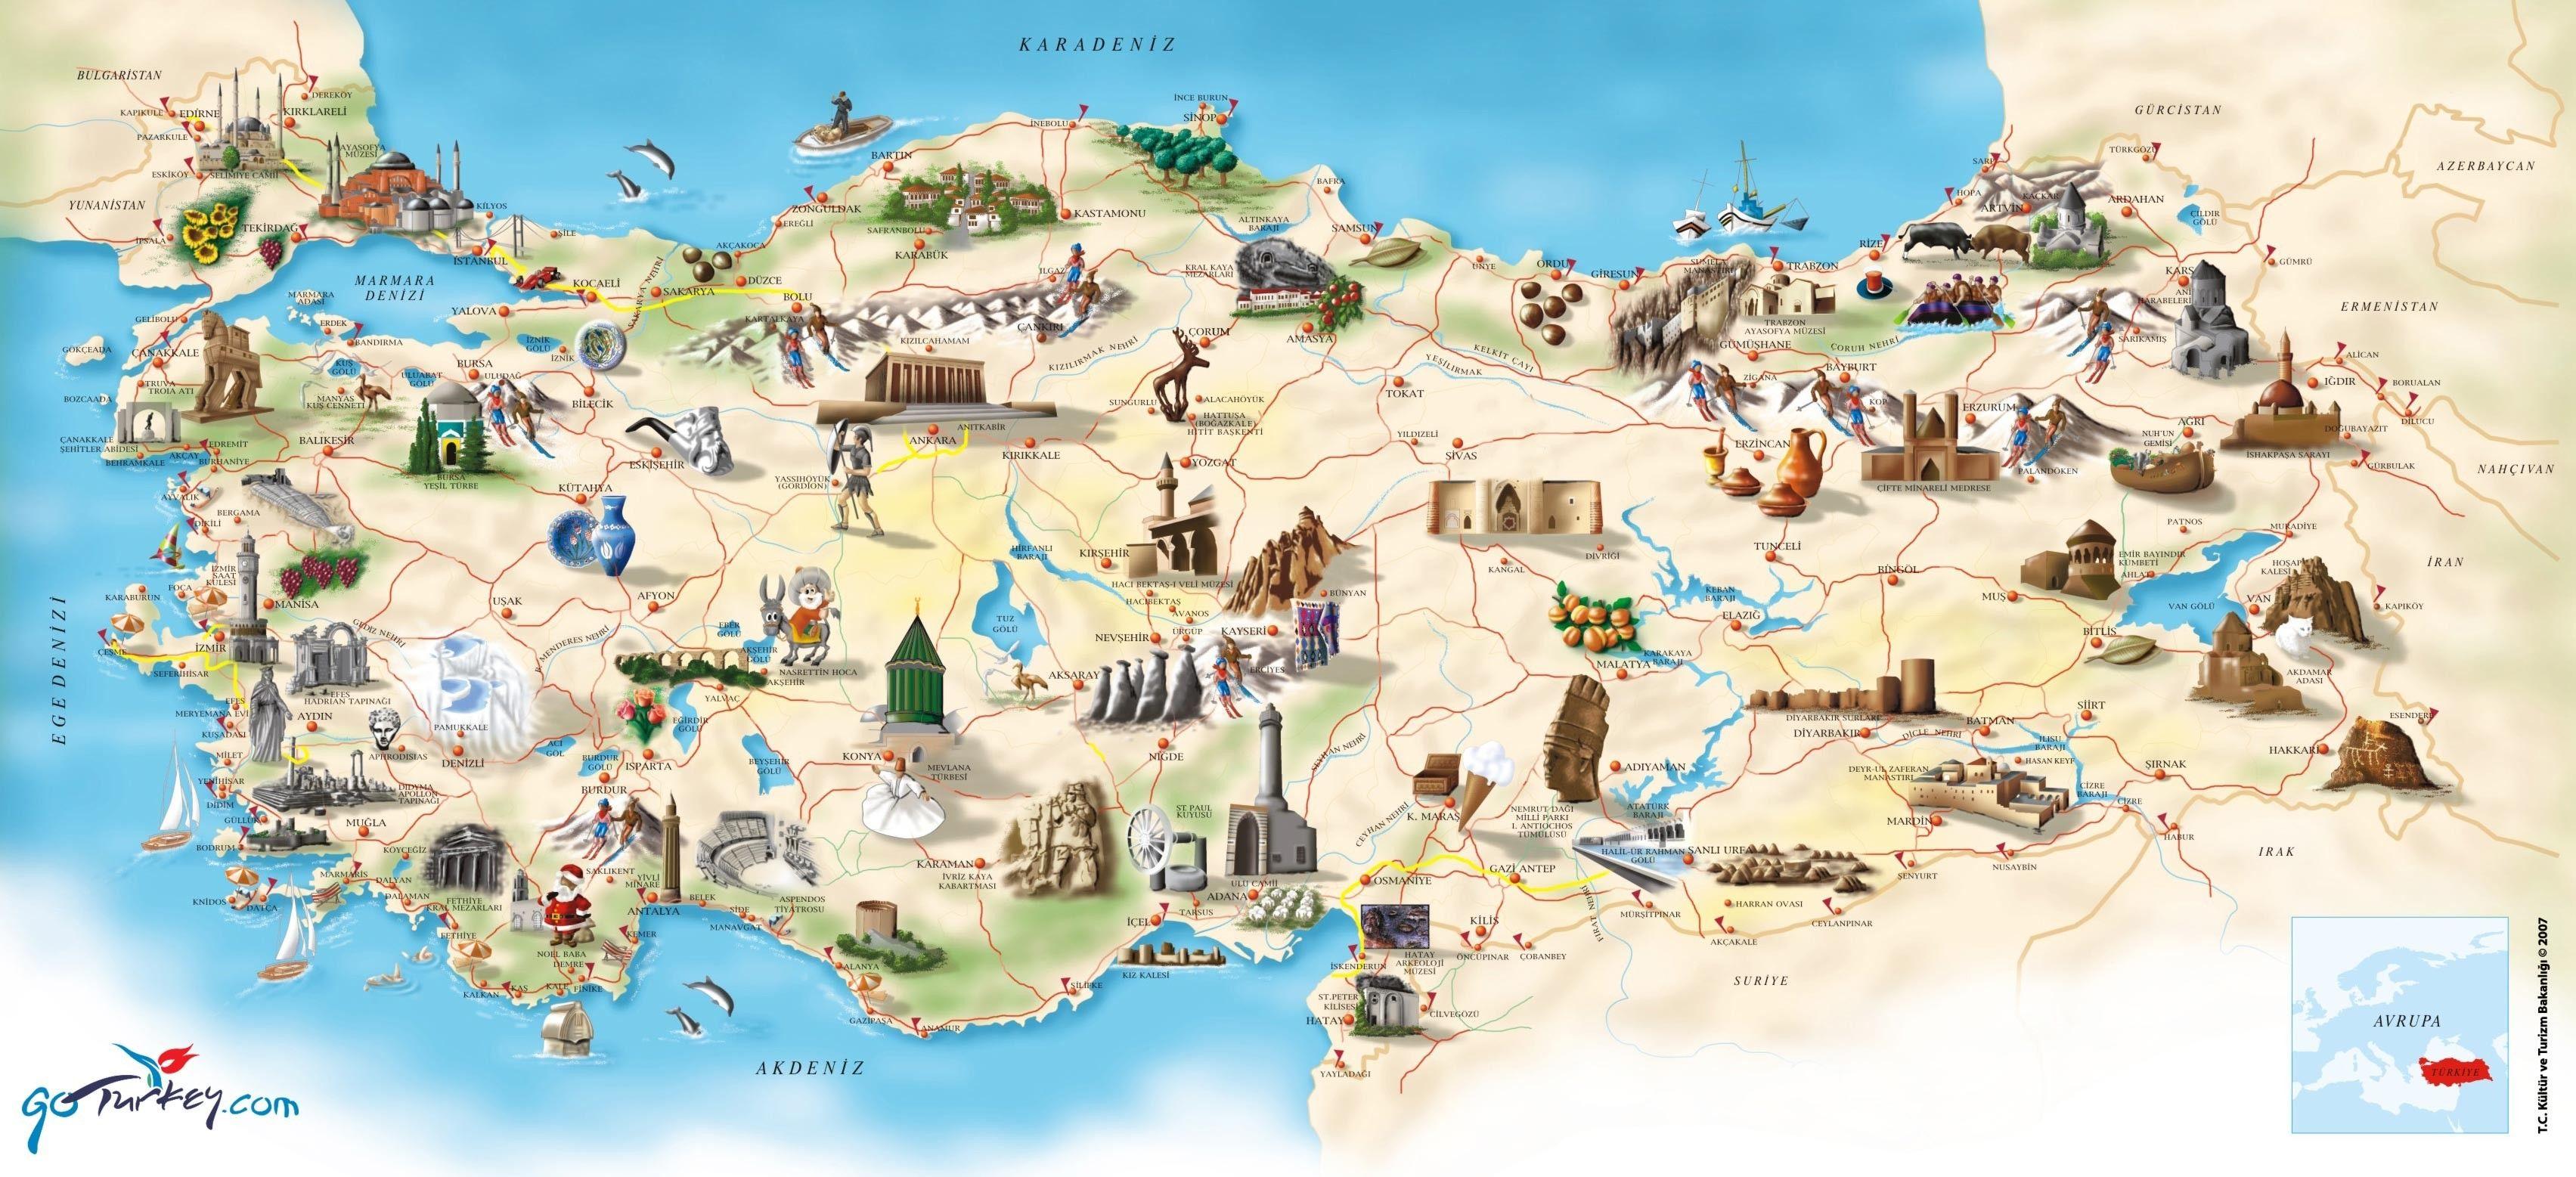 Turkey maps wallpaper. PC